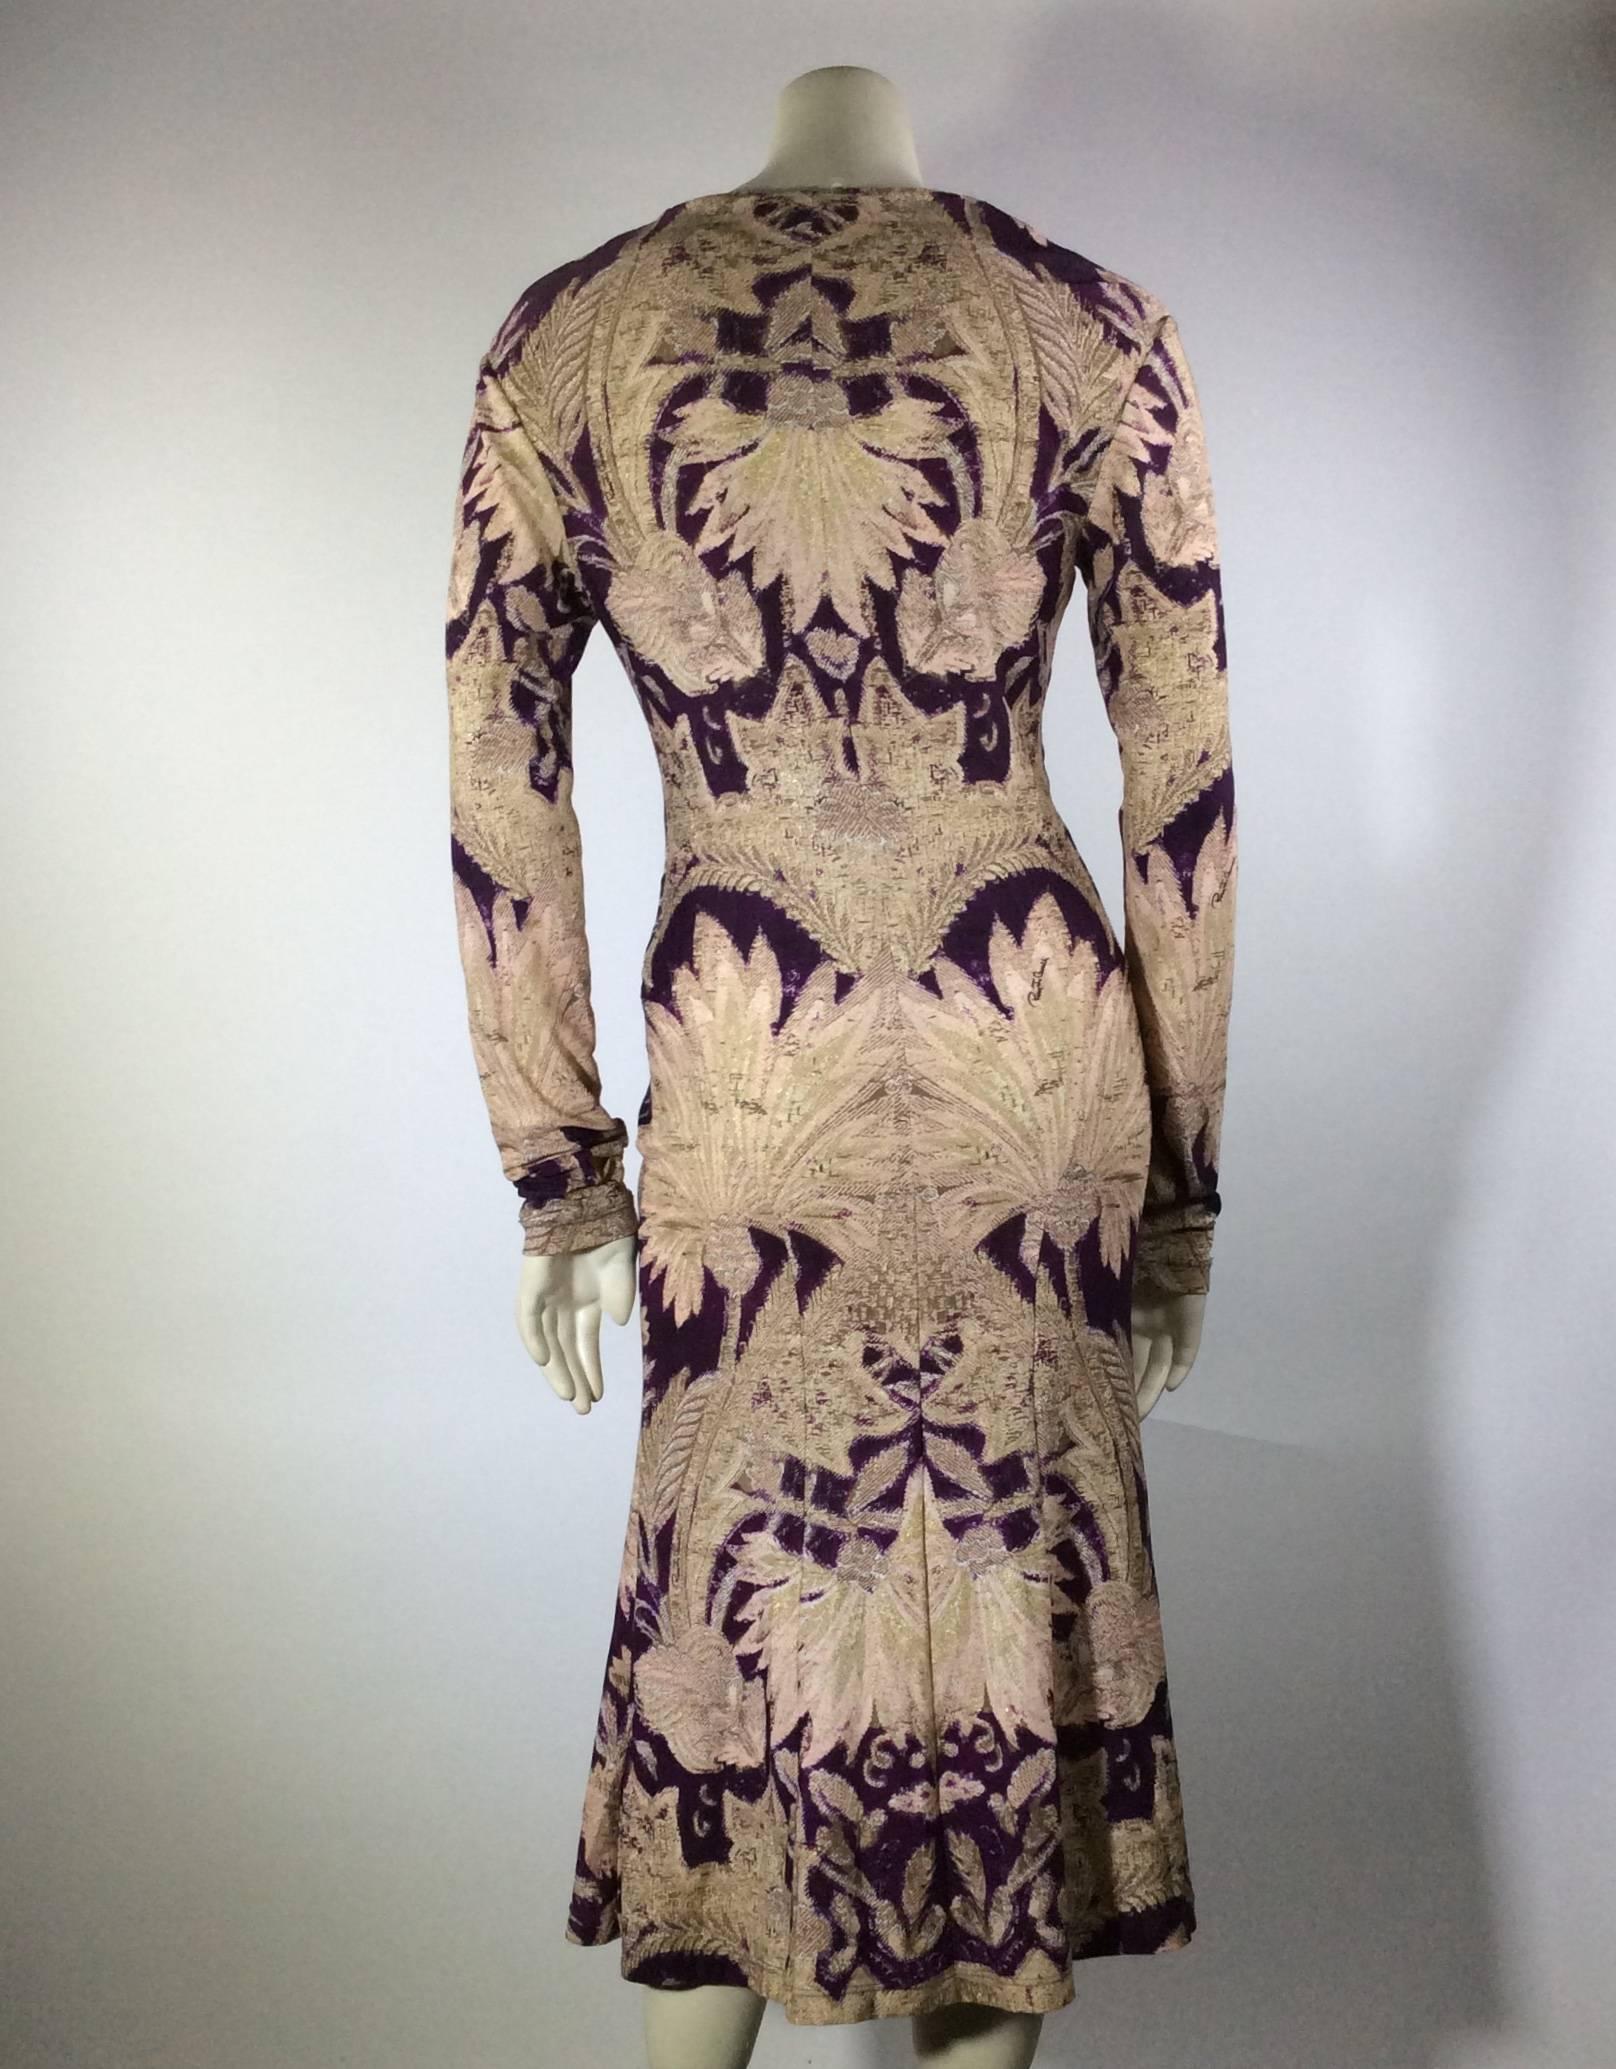 Roberto Cavalli Purple and Pink Floral Motif Printed Dress 1